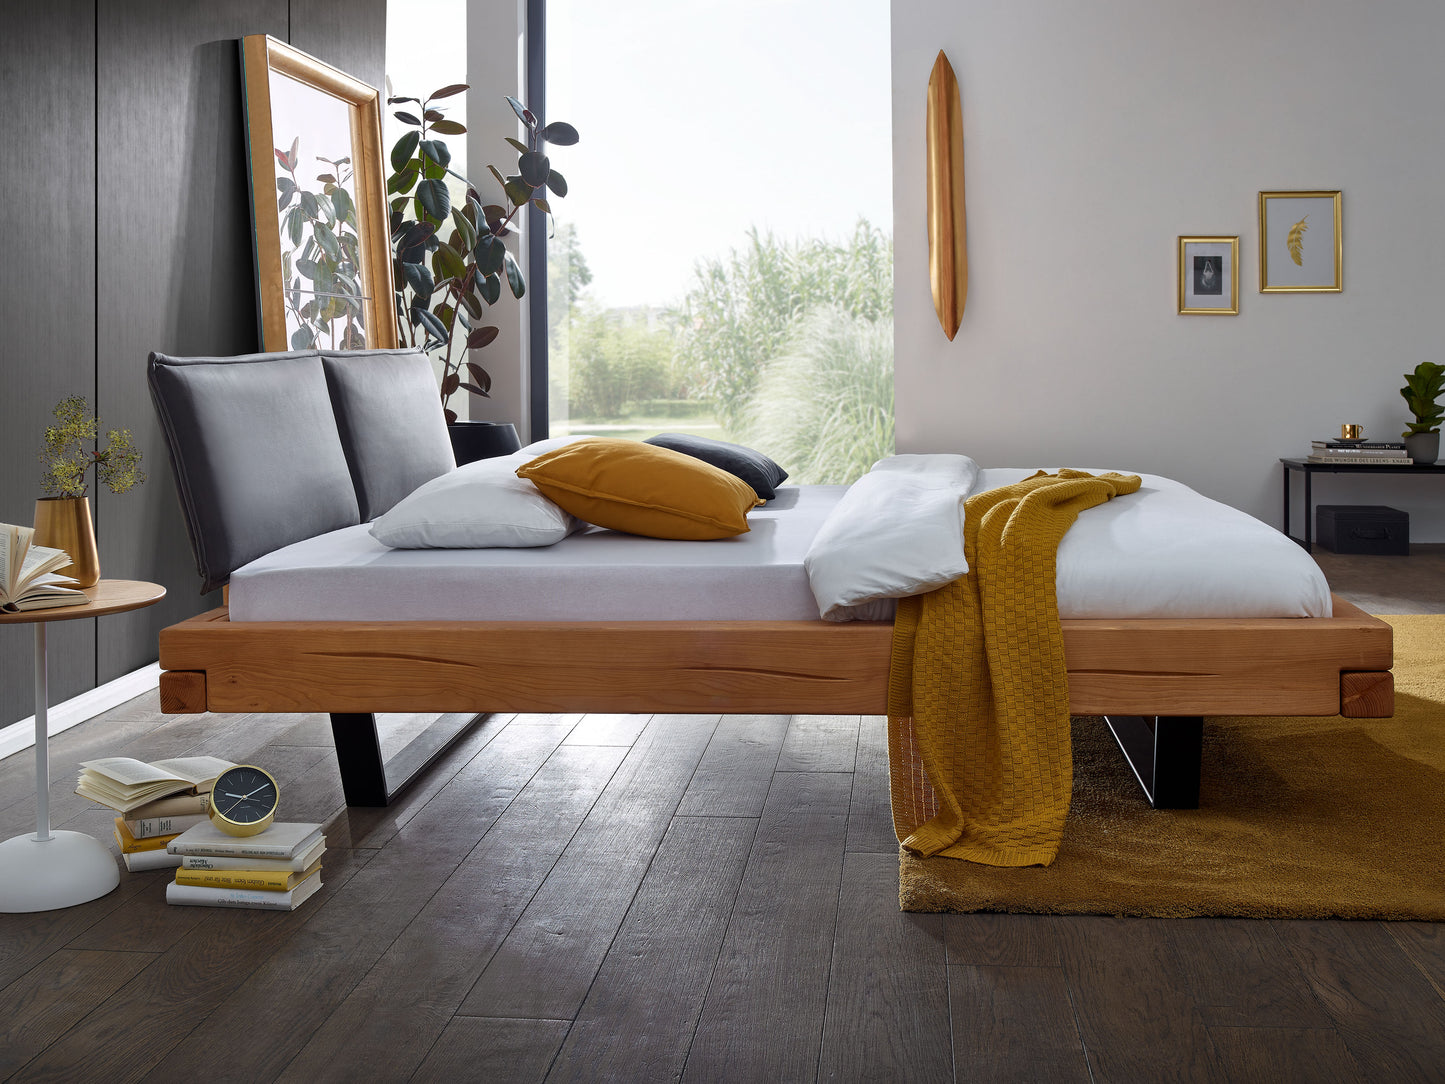 Rahmenbett Bett Massivholz Fichte 140x200cm